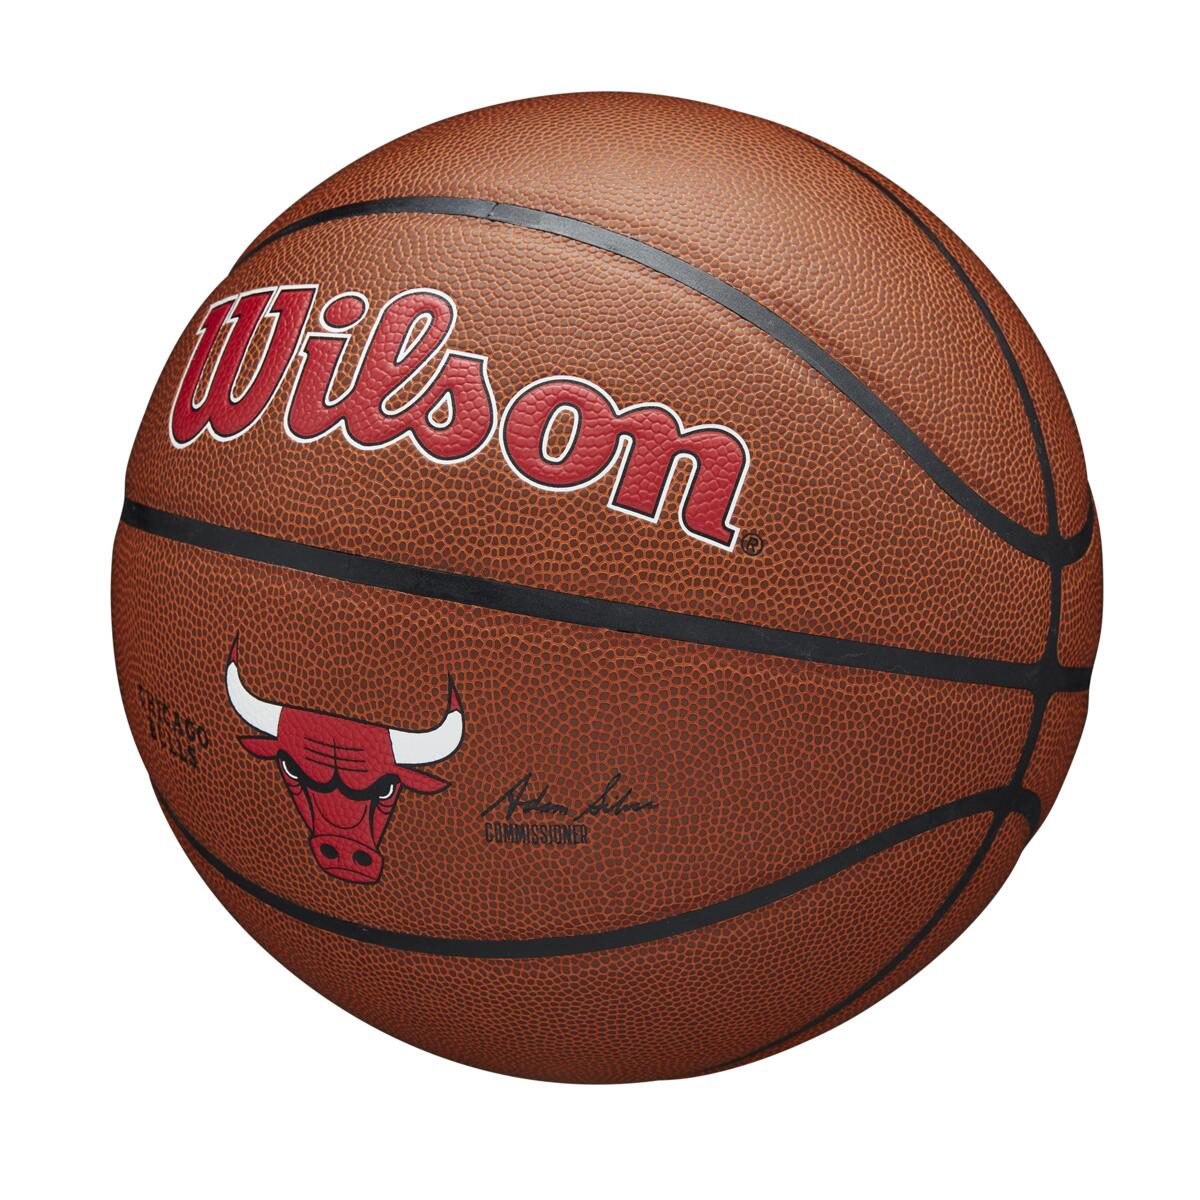 WILSON NBA COMPOSITE CHICAGO BULLS 7